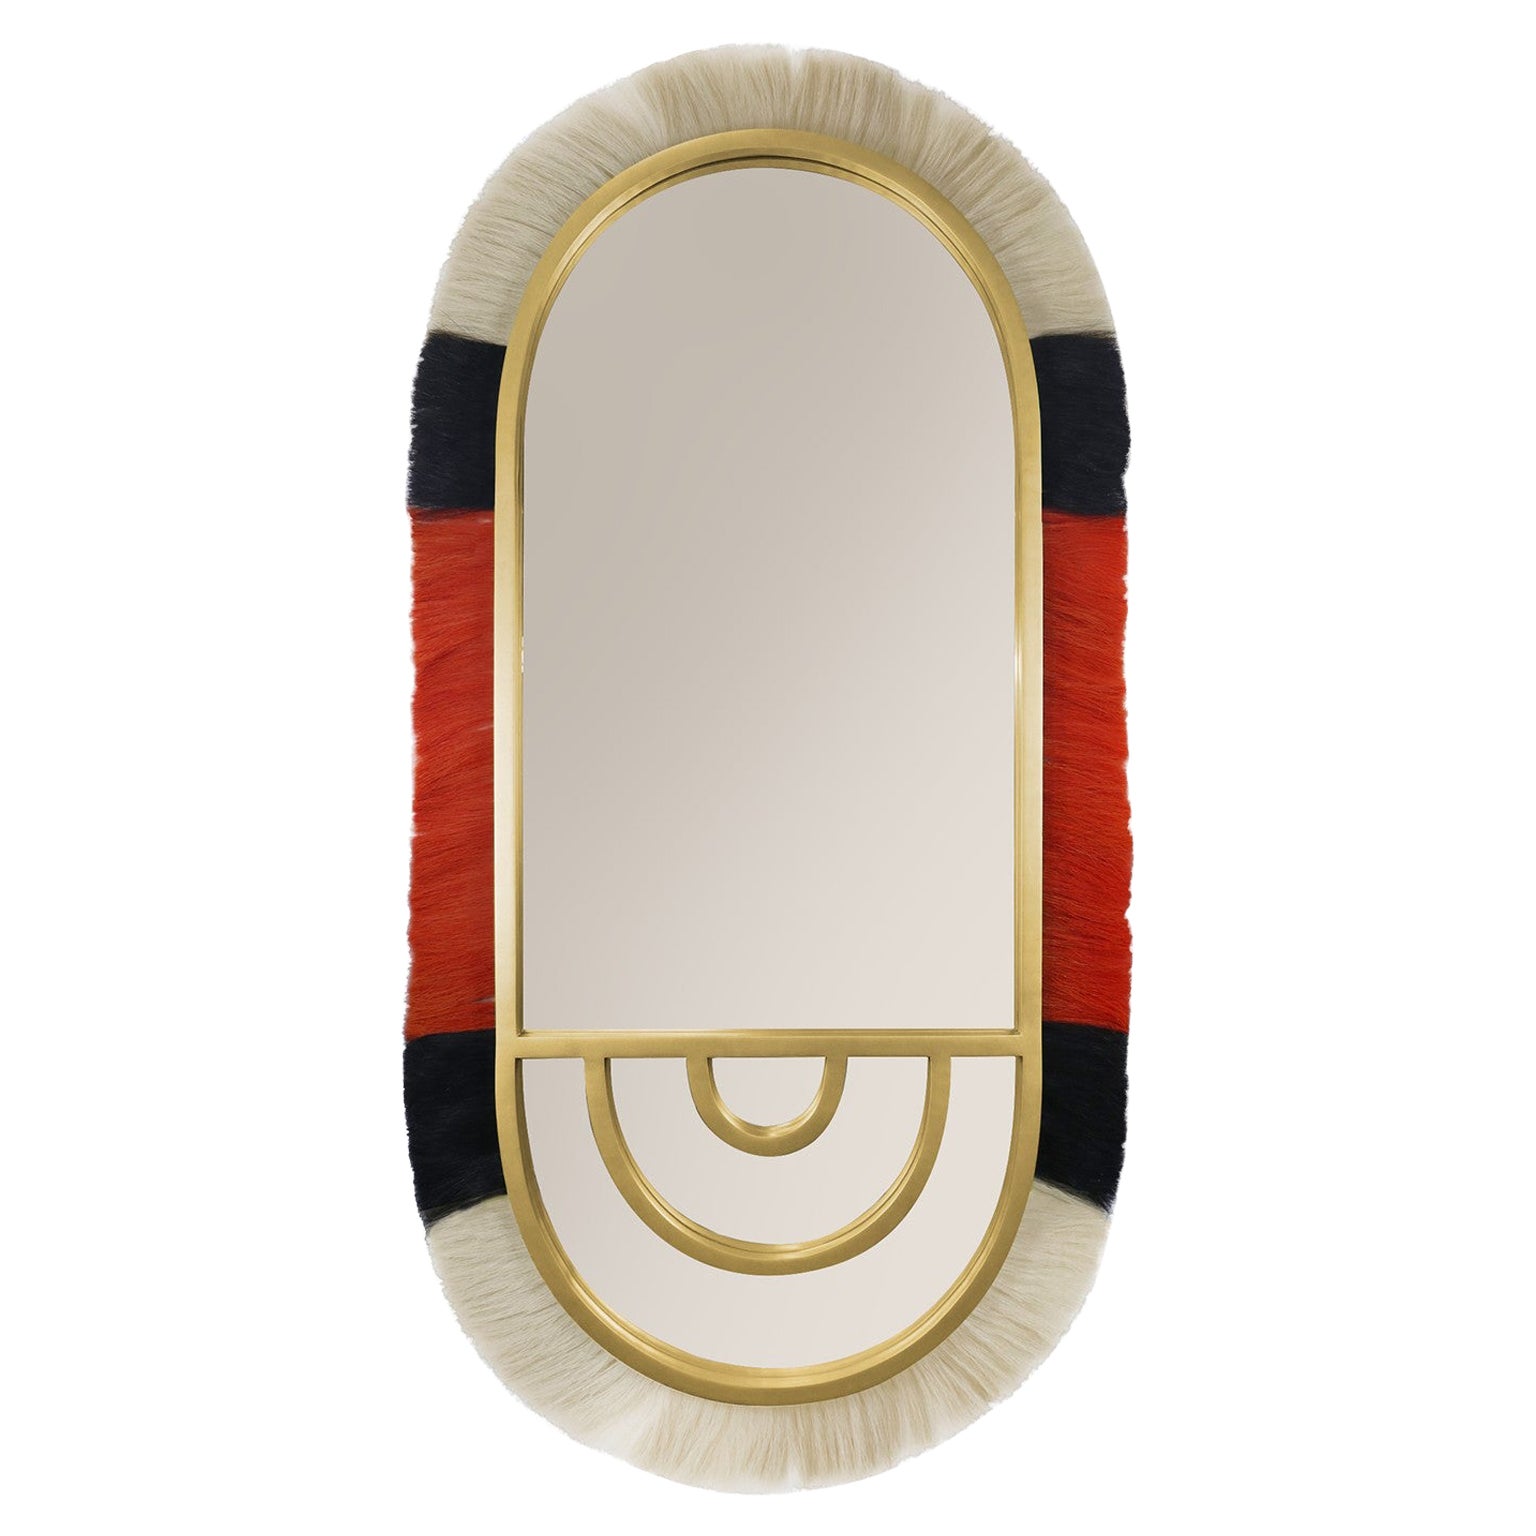 21st Century Modern Bohemian Oval Wall Mirror in Natural Black & Orange Fiber